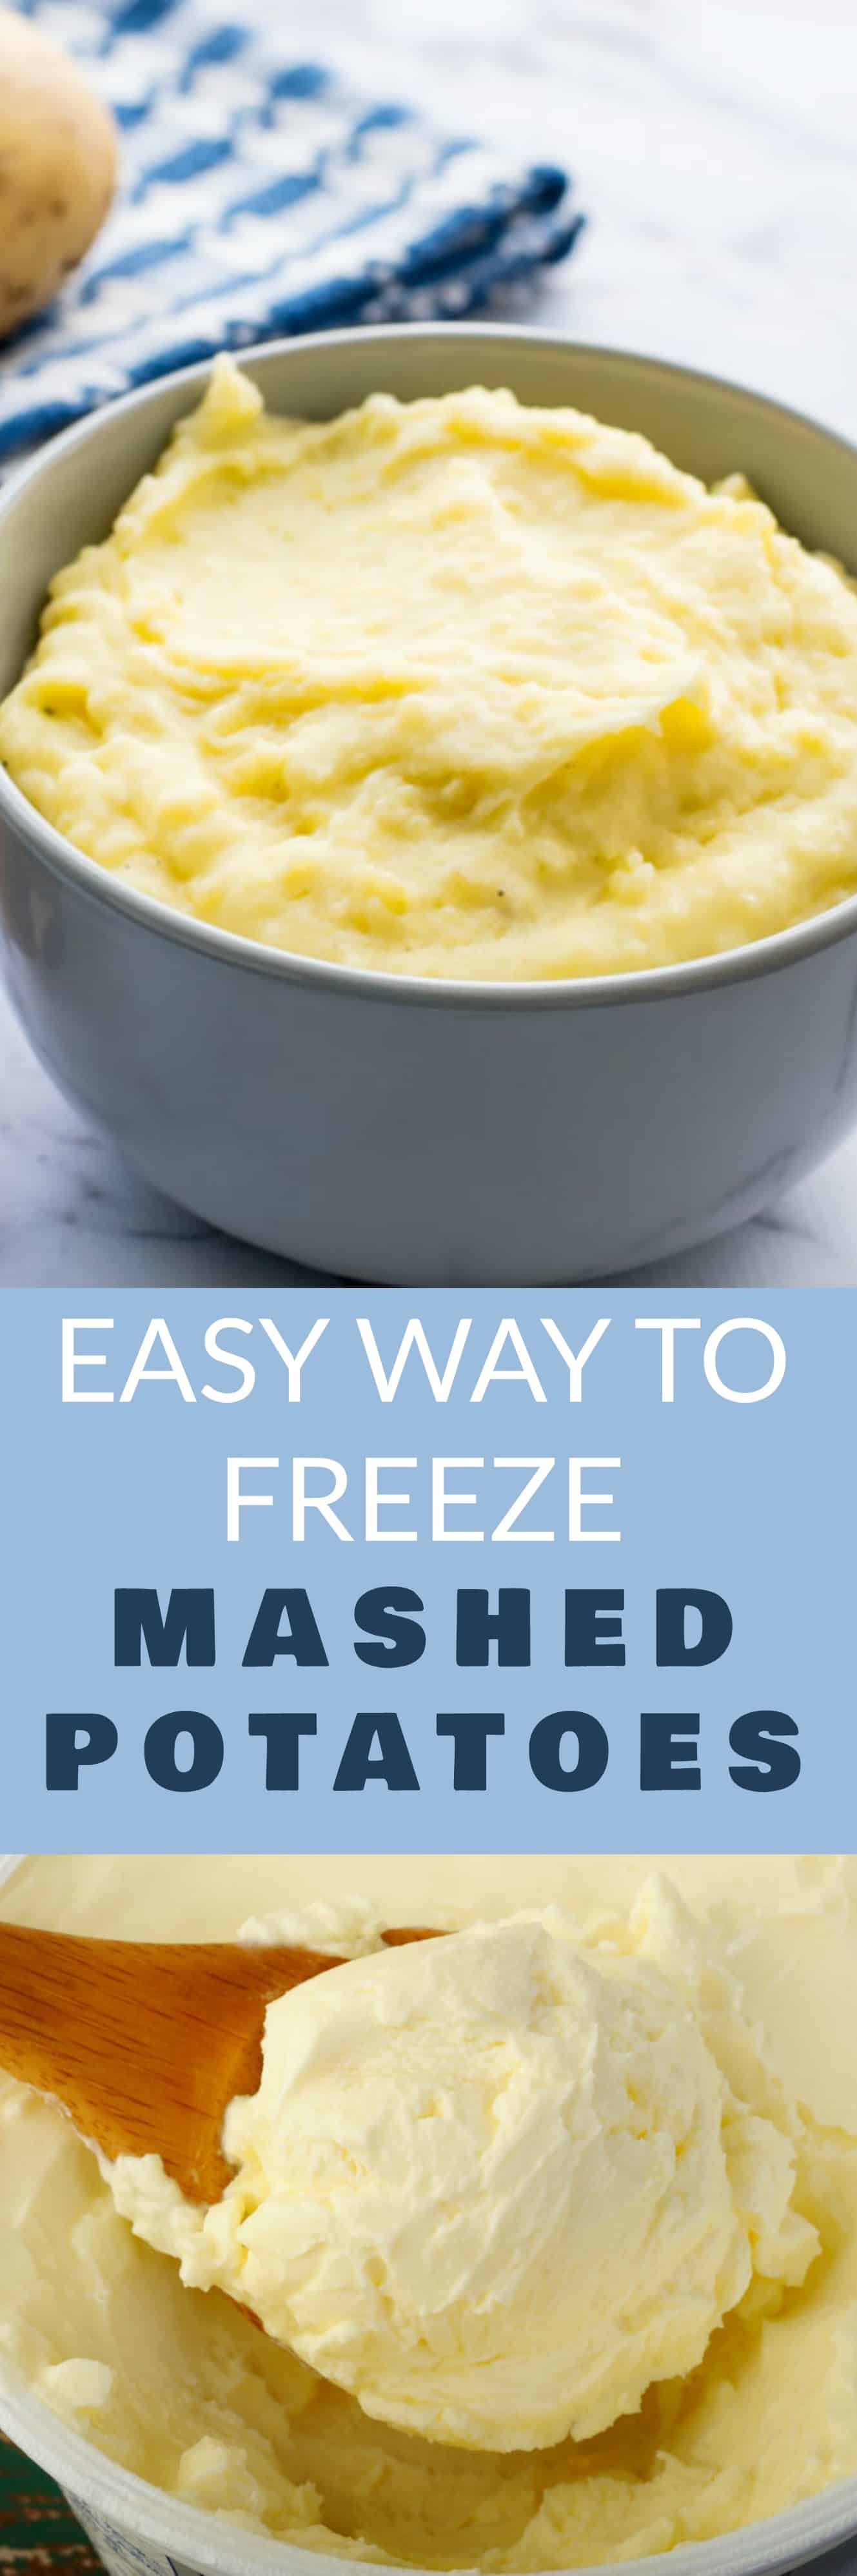 Can Mashed Potatoes Be Frozen
 Easy Way to Freeze Mashed Potatoes Brooklyn Farm Girl